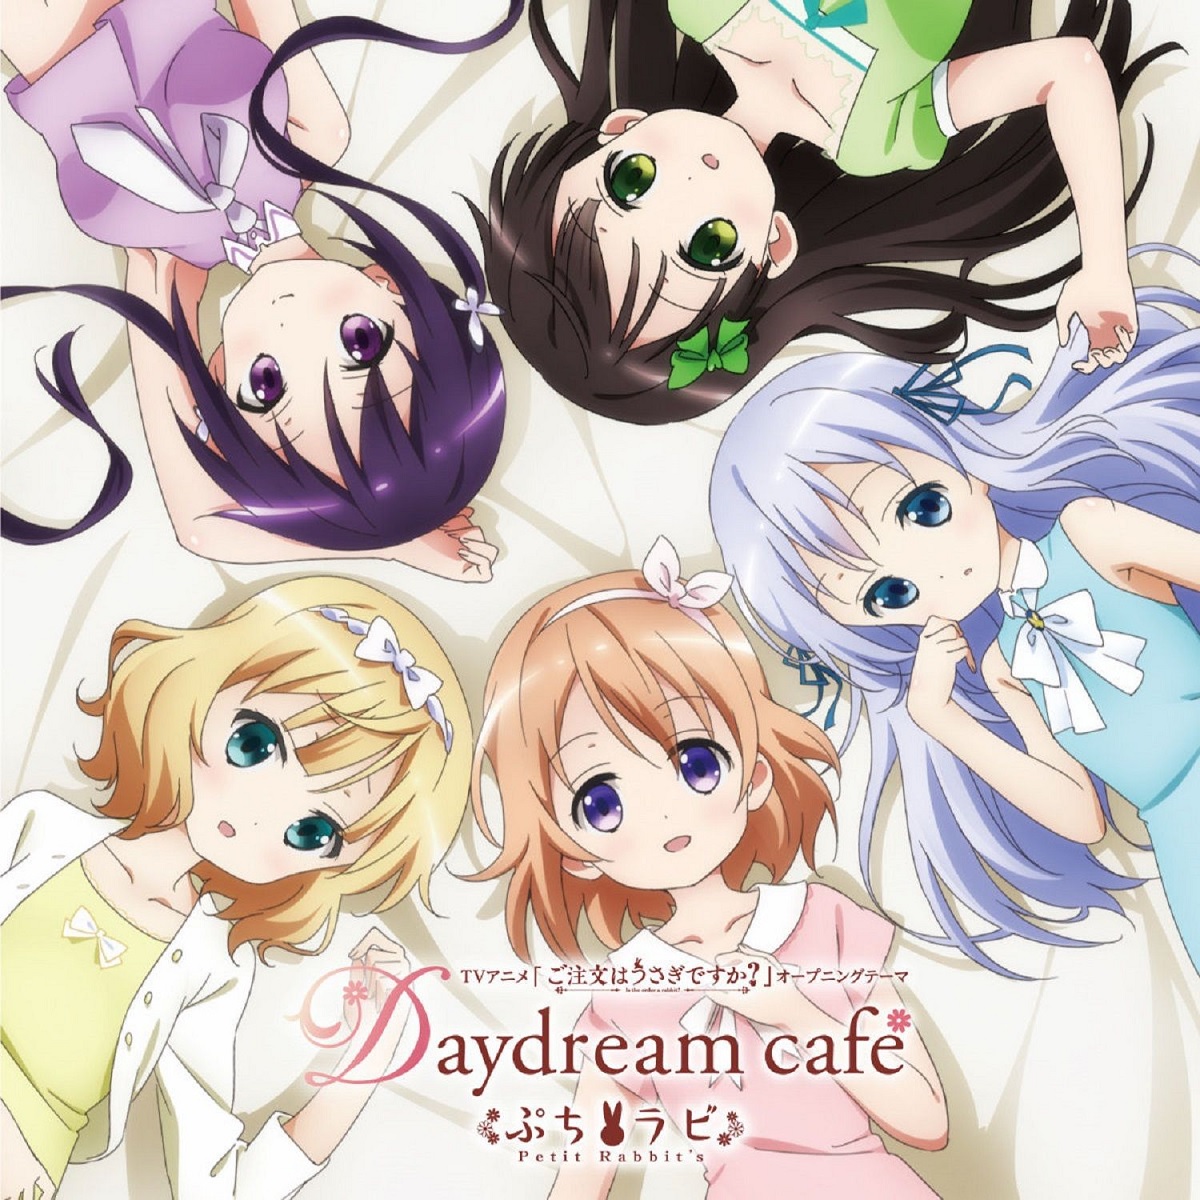 『Petit Rabbit's - 日常デコレーション』収録の『Daydream café』ジャケット